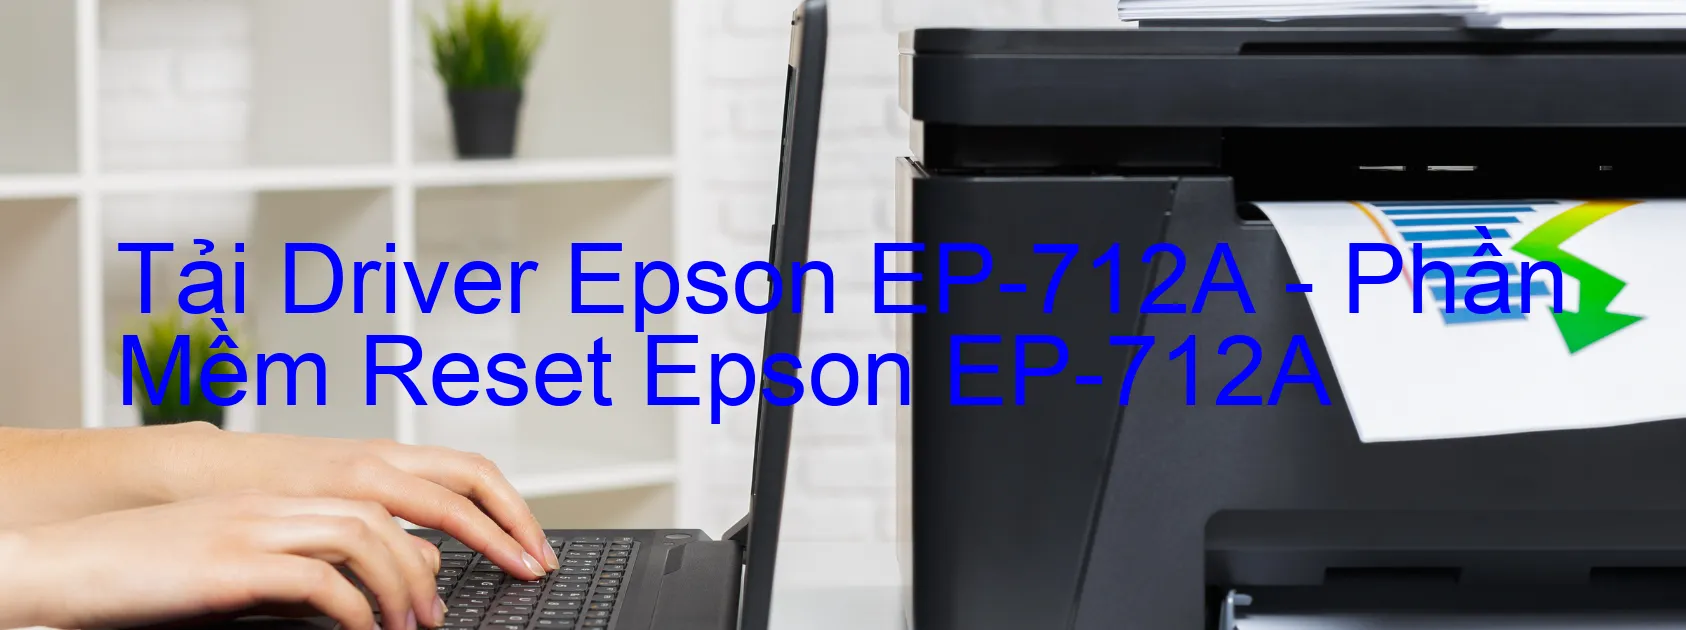 Driver Epson EP-712A, Phần Mềm Reset Epson EP-712A